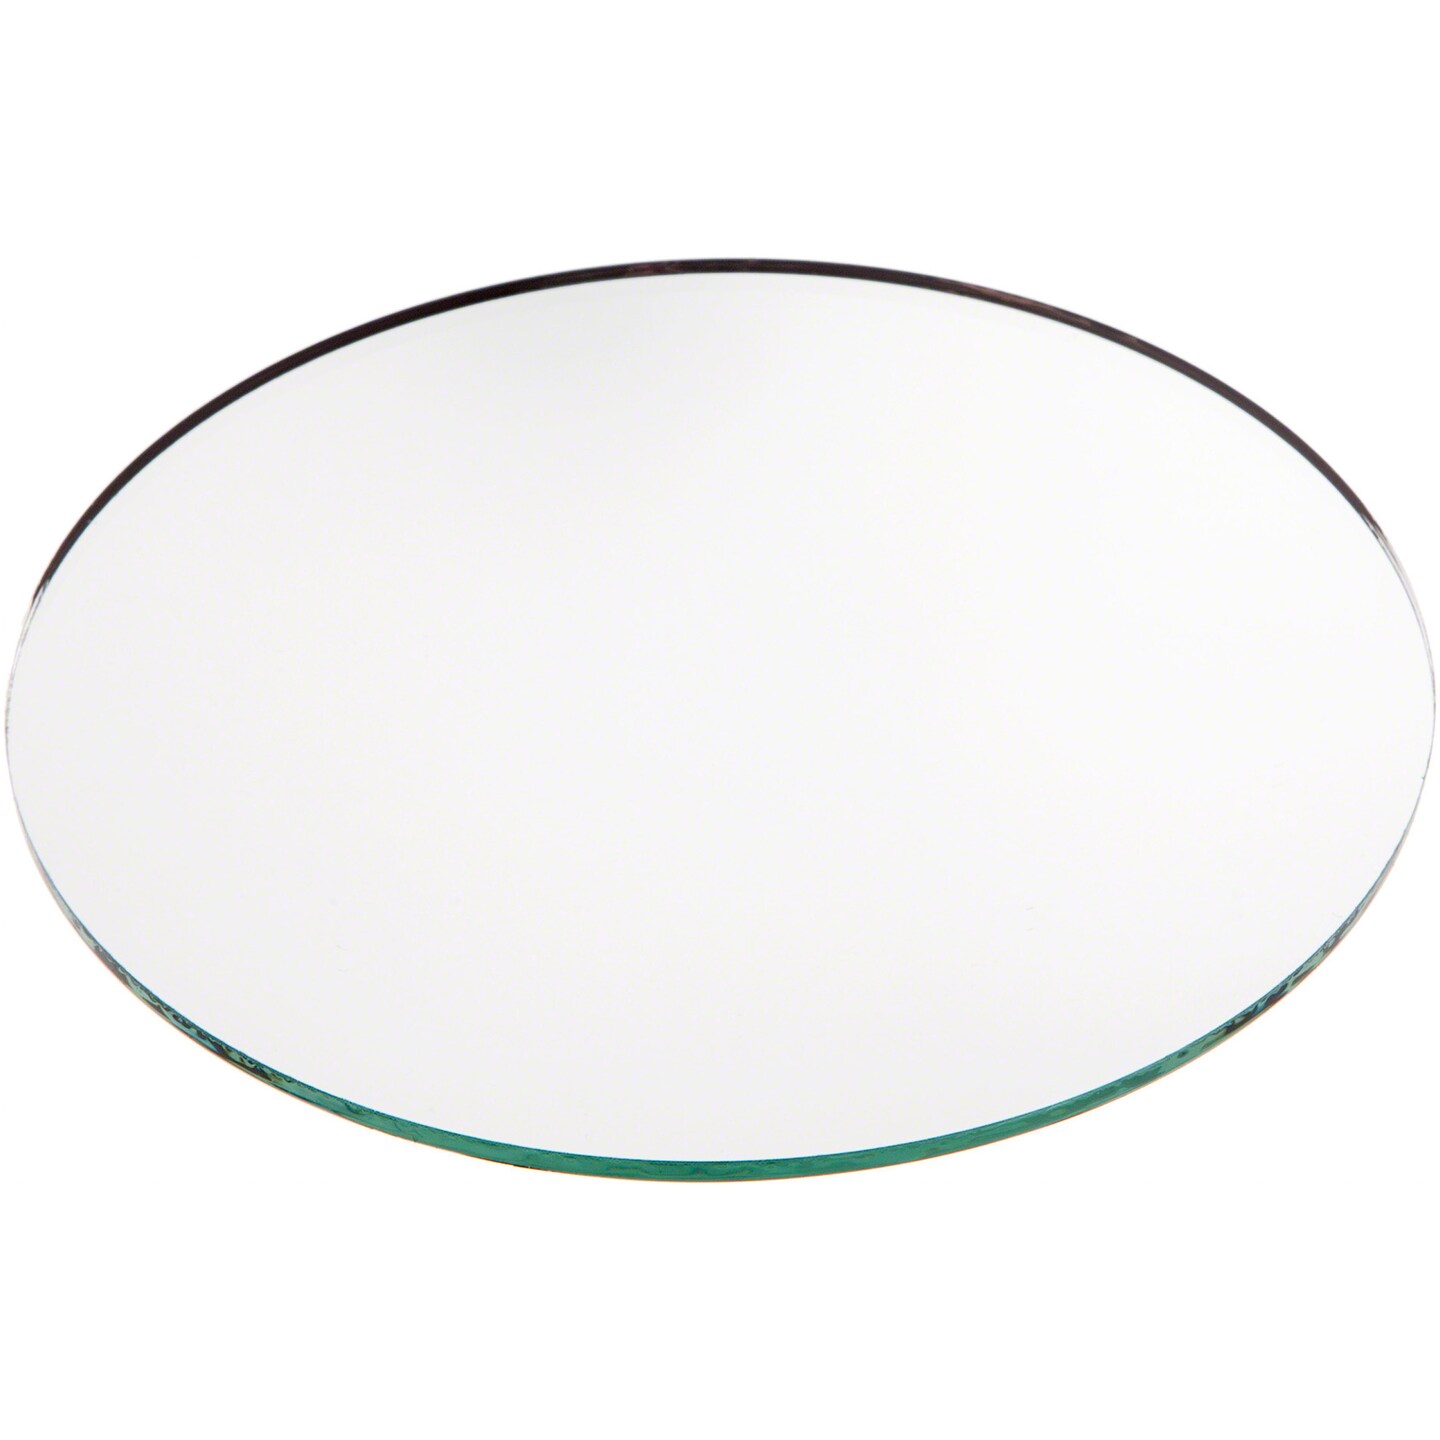 Plymor Round 3mm Non-Beveled Glass Mirror, 6 inch x 6 inch